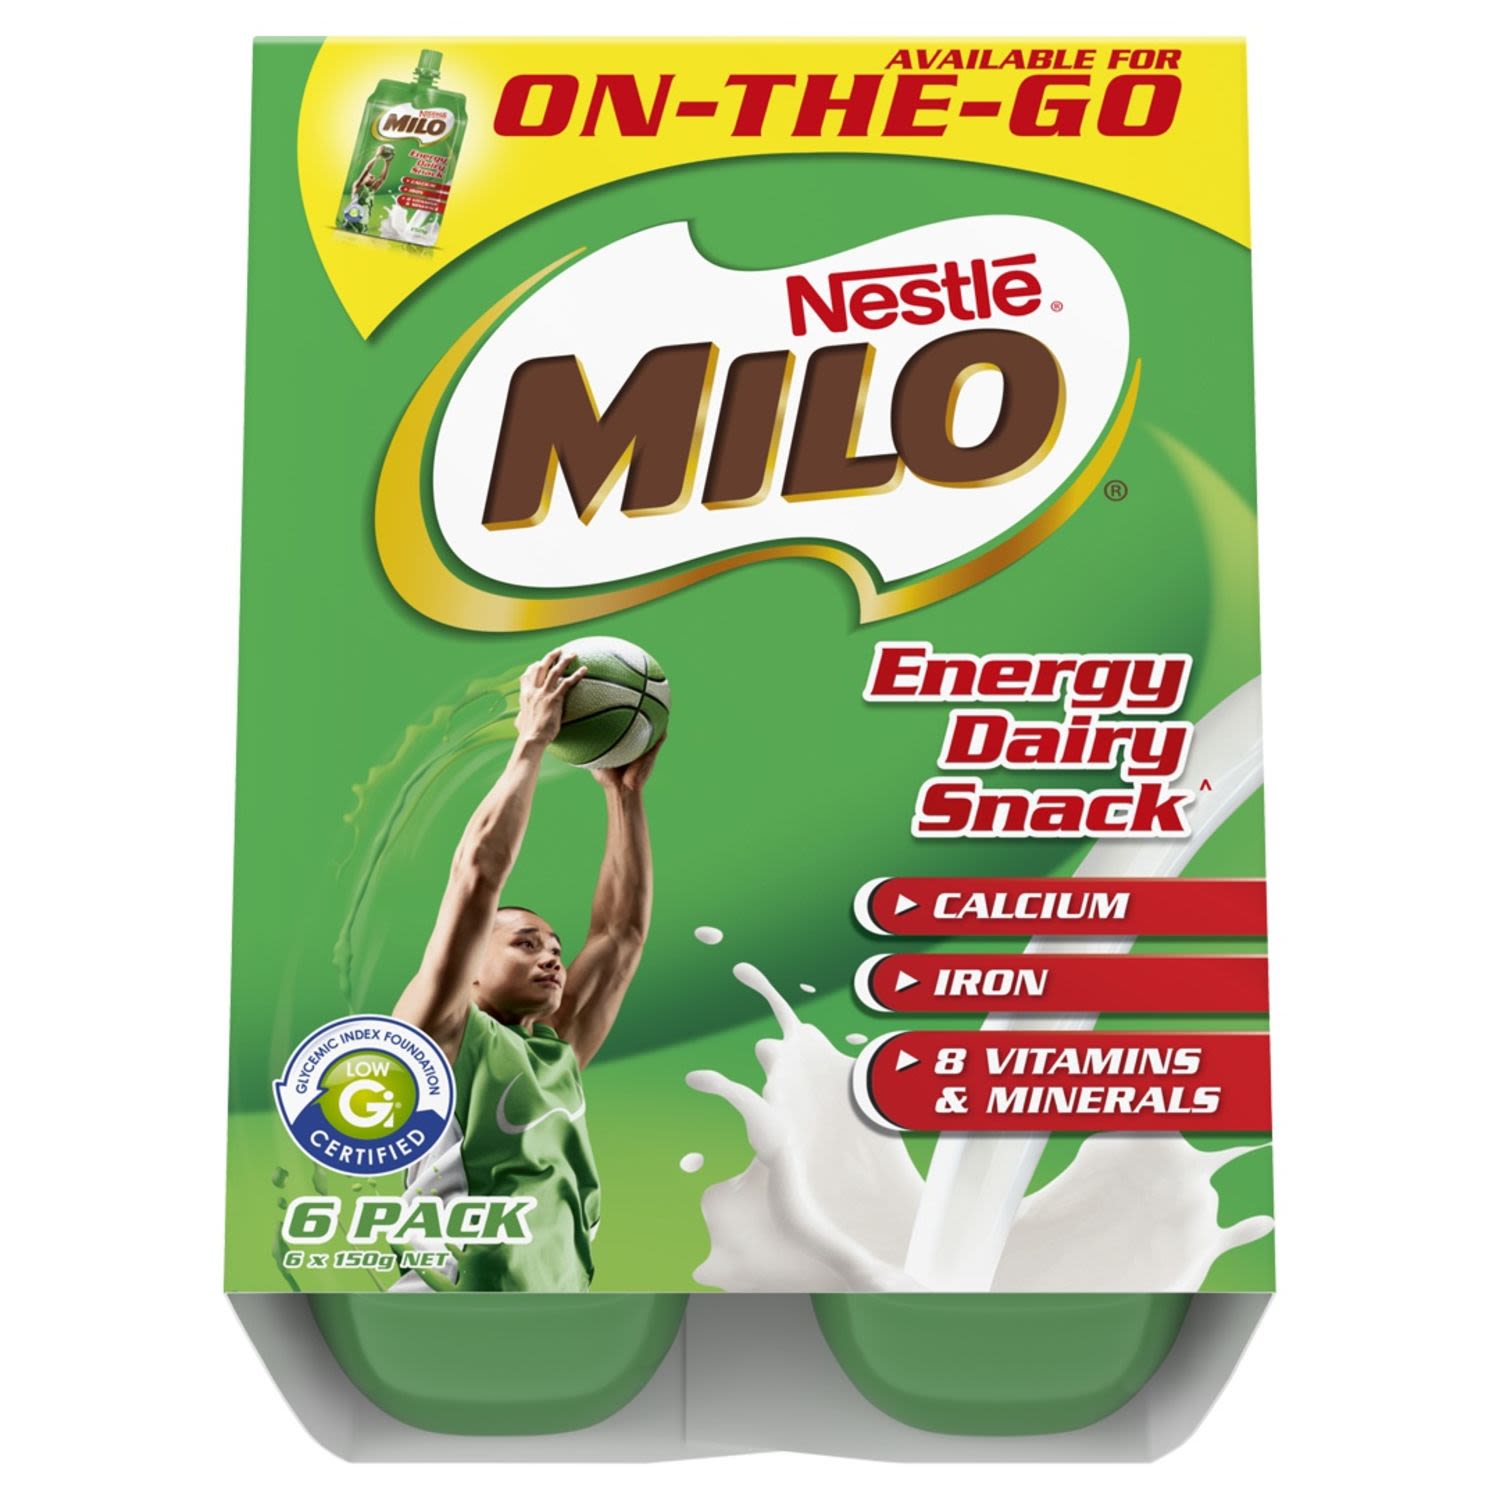 Nestlé Milo Energy Dairy Snack , 6 Each